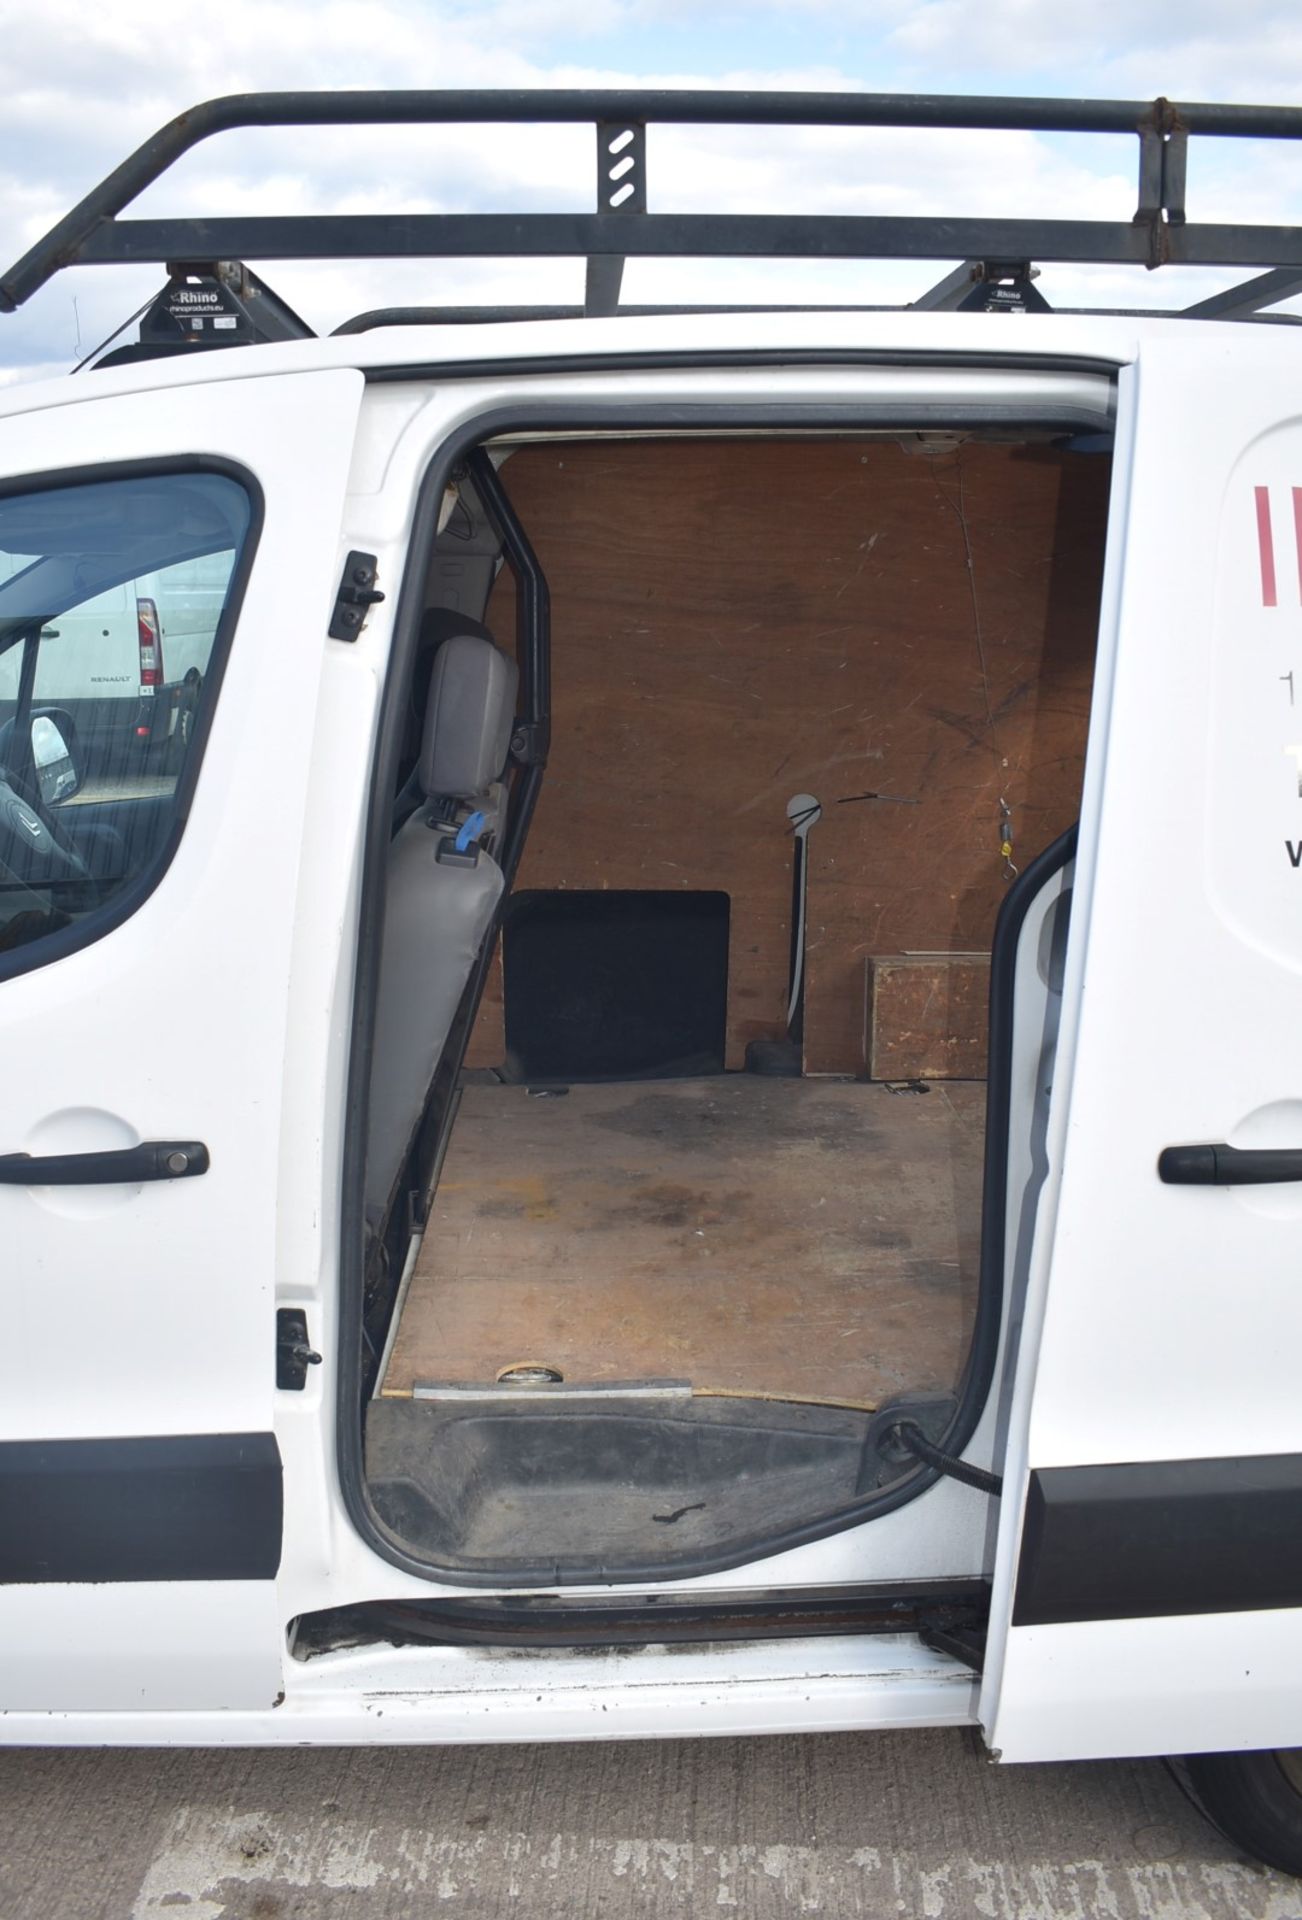 1 x Citroen Berlingo 625 Enterprise Van - Year 2013 - 5 Months MOT - Includes V5 and Key - Image 19 of 30